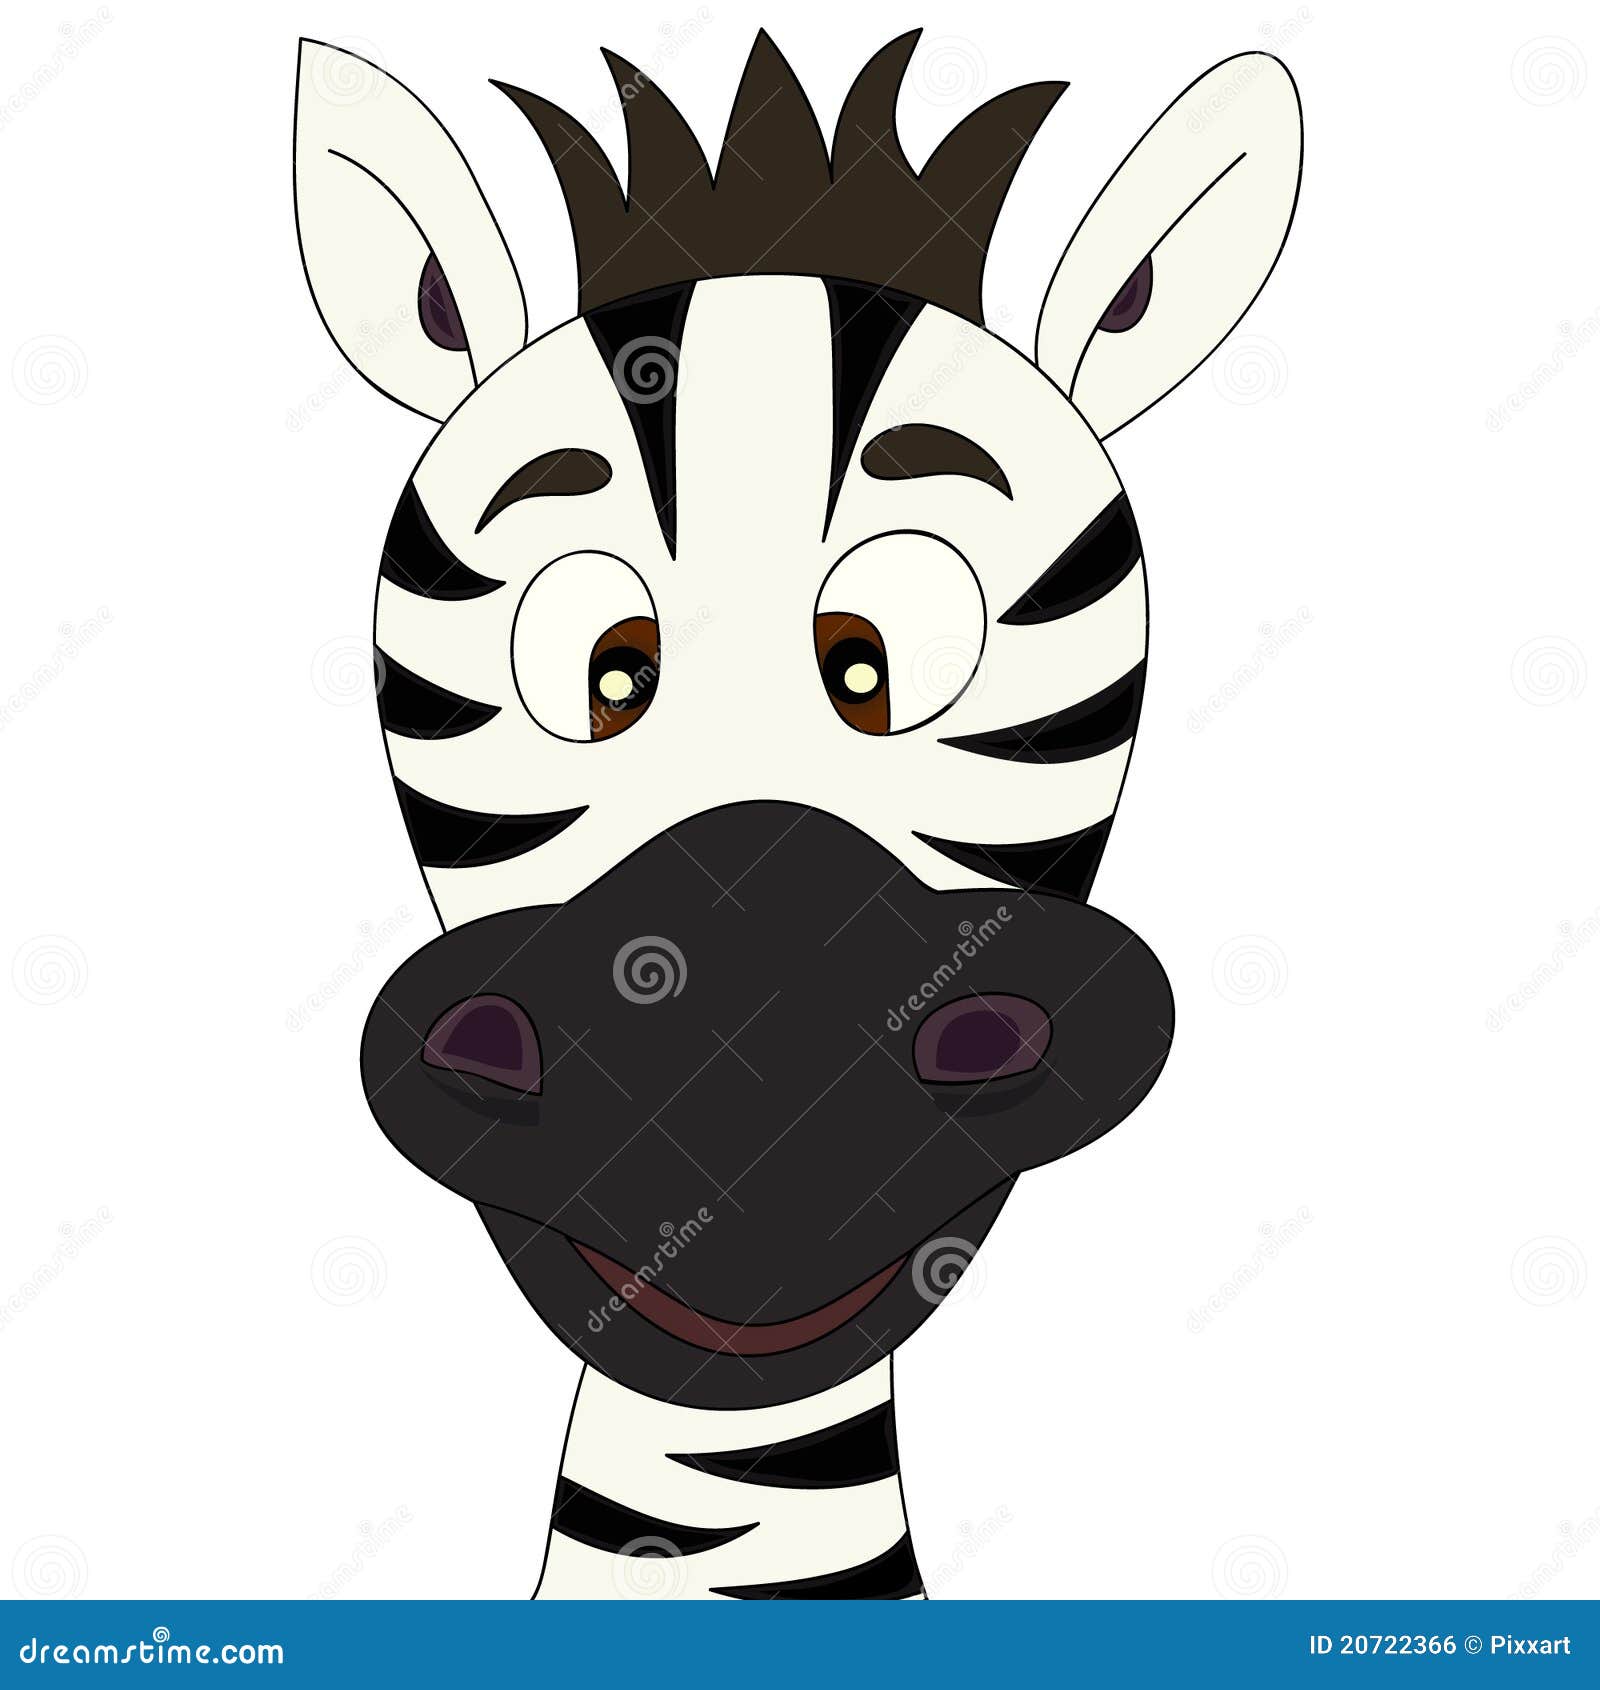 clipart zebra face - photo #18